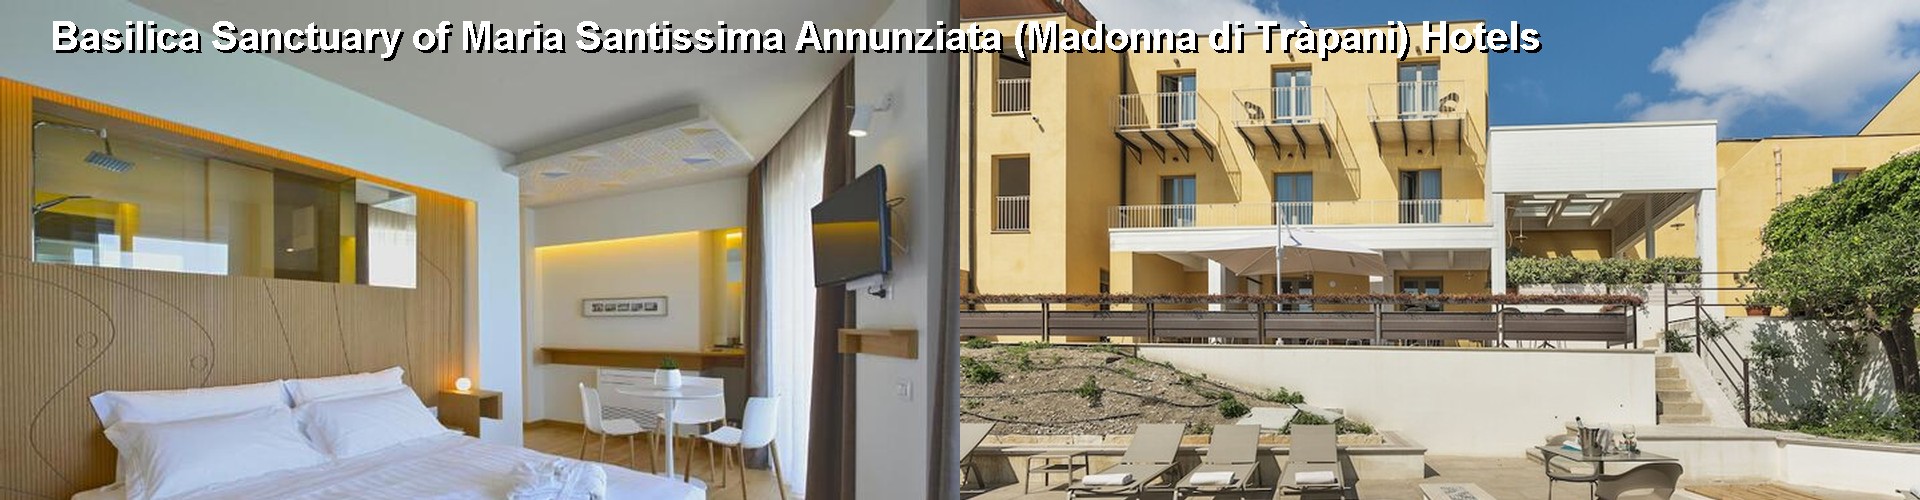 5 Best Hotels near Basilica Sanctuary of Maria Santissima Annunziata (Madonna di Tràpani)